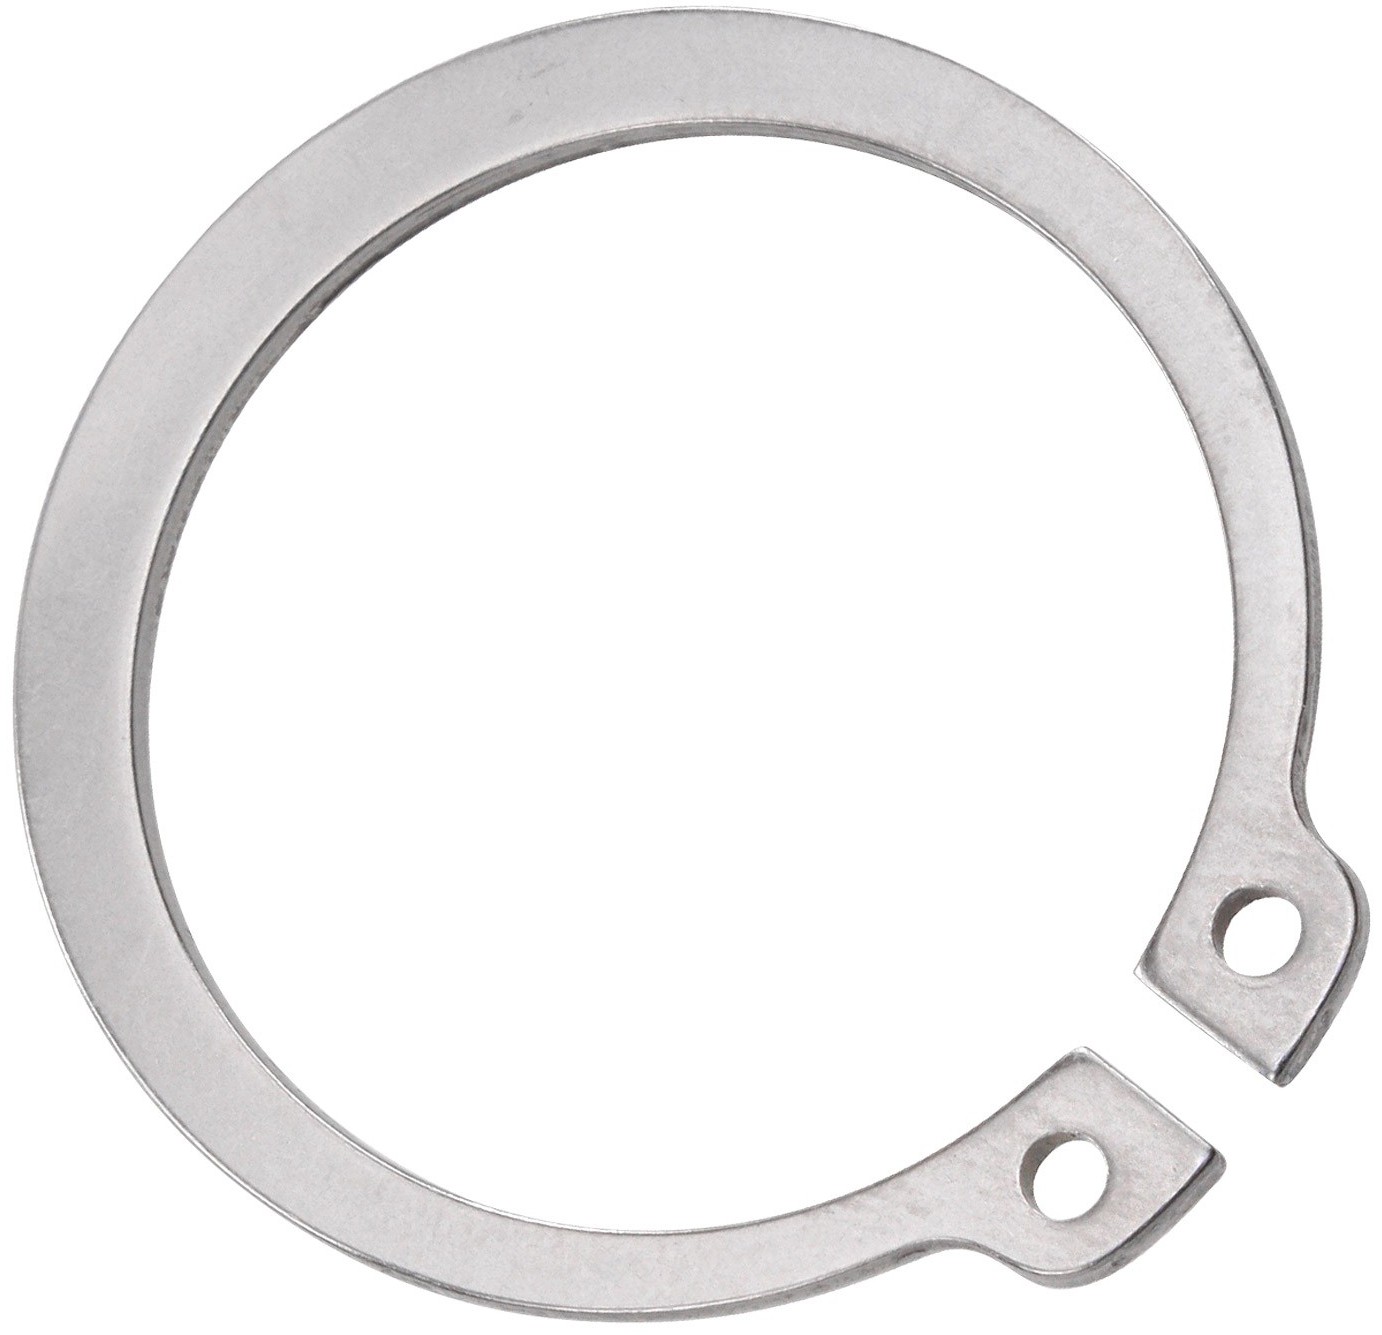 Кольцо стопорное наружное 160х4 DIN 471, нержавеющая сталь 1.4122 (А2) - фото